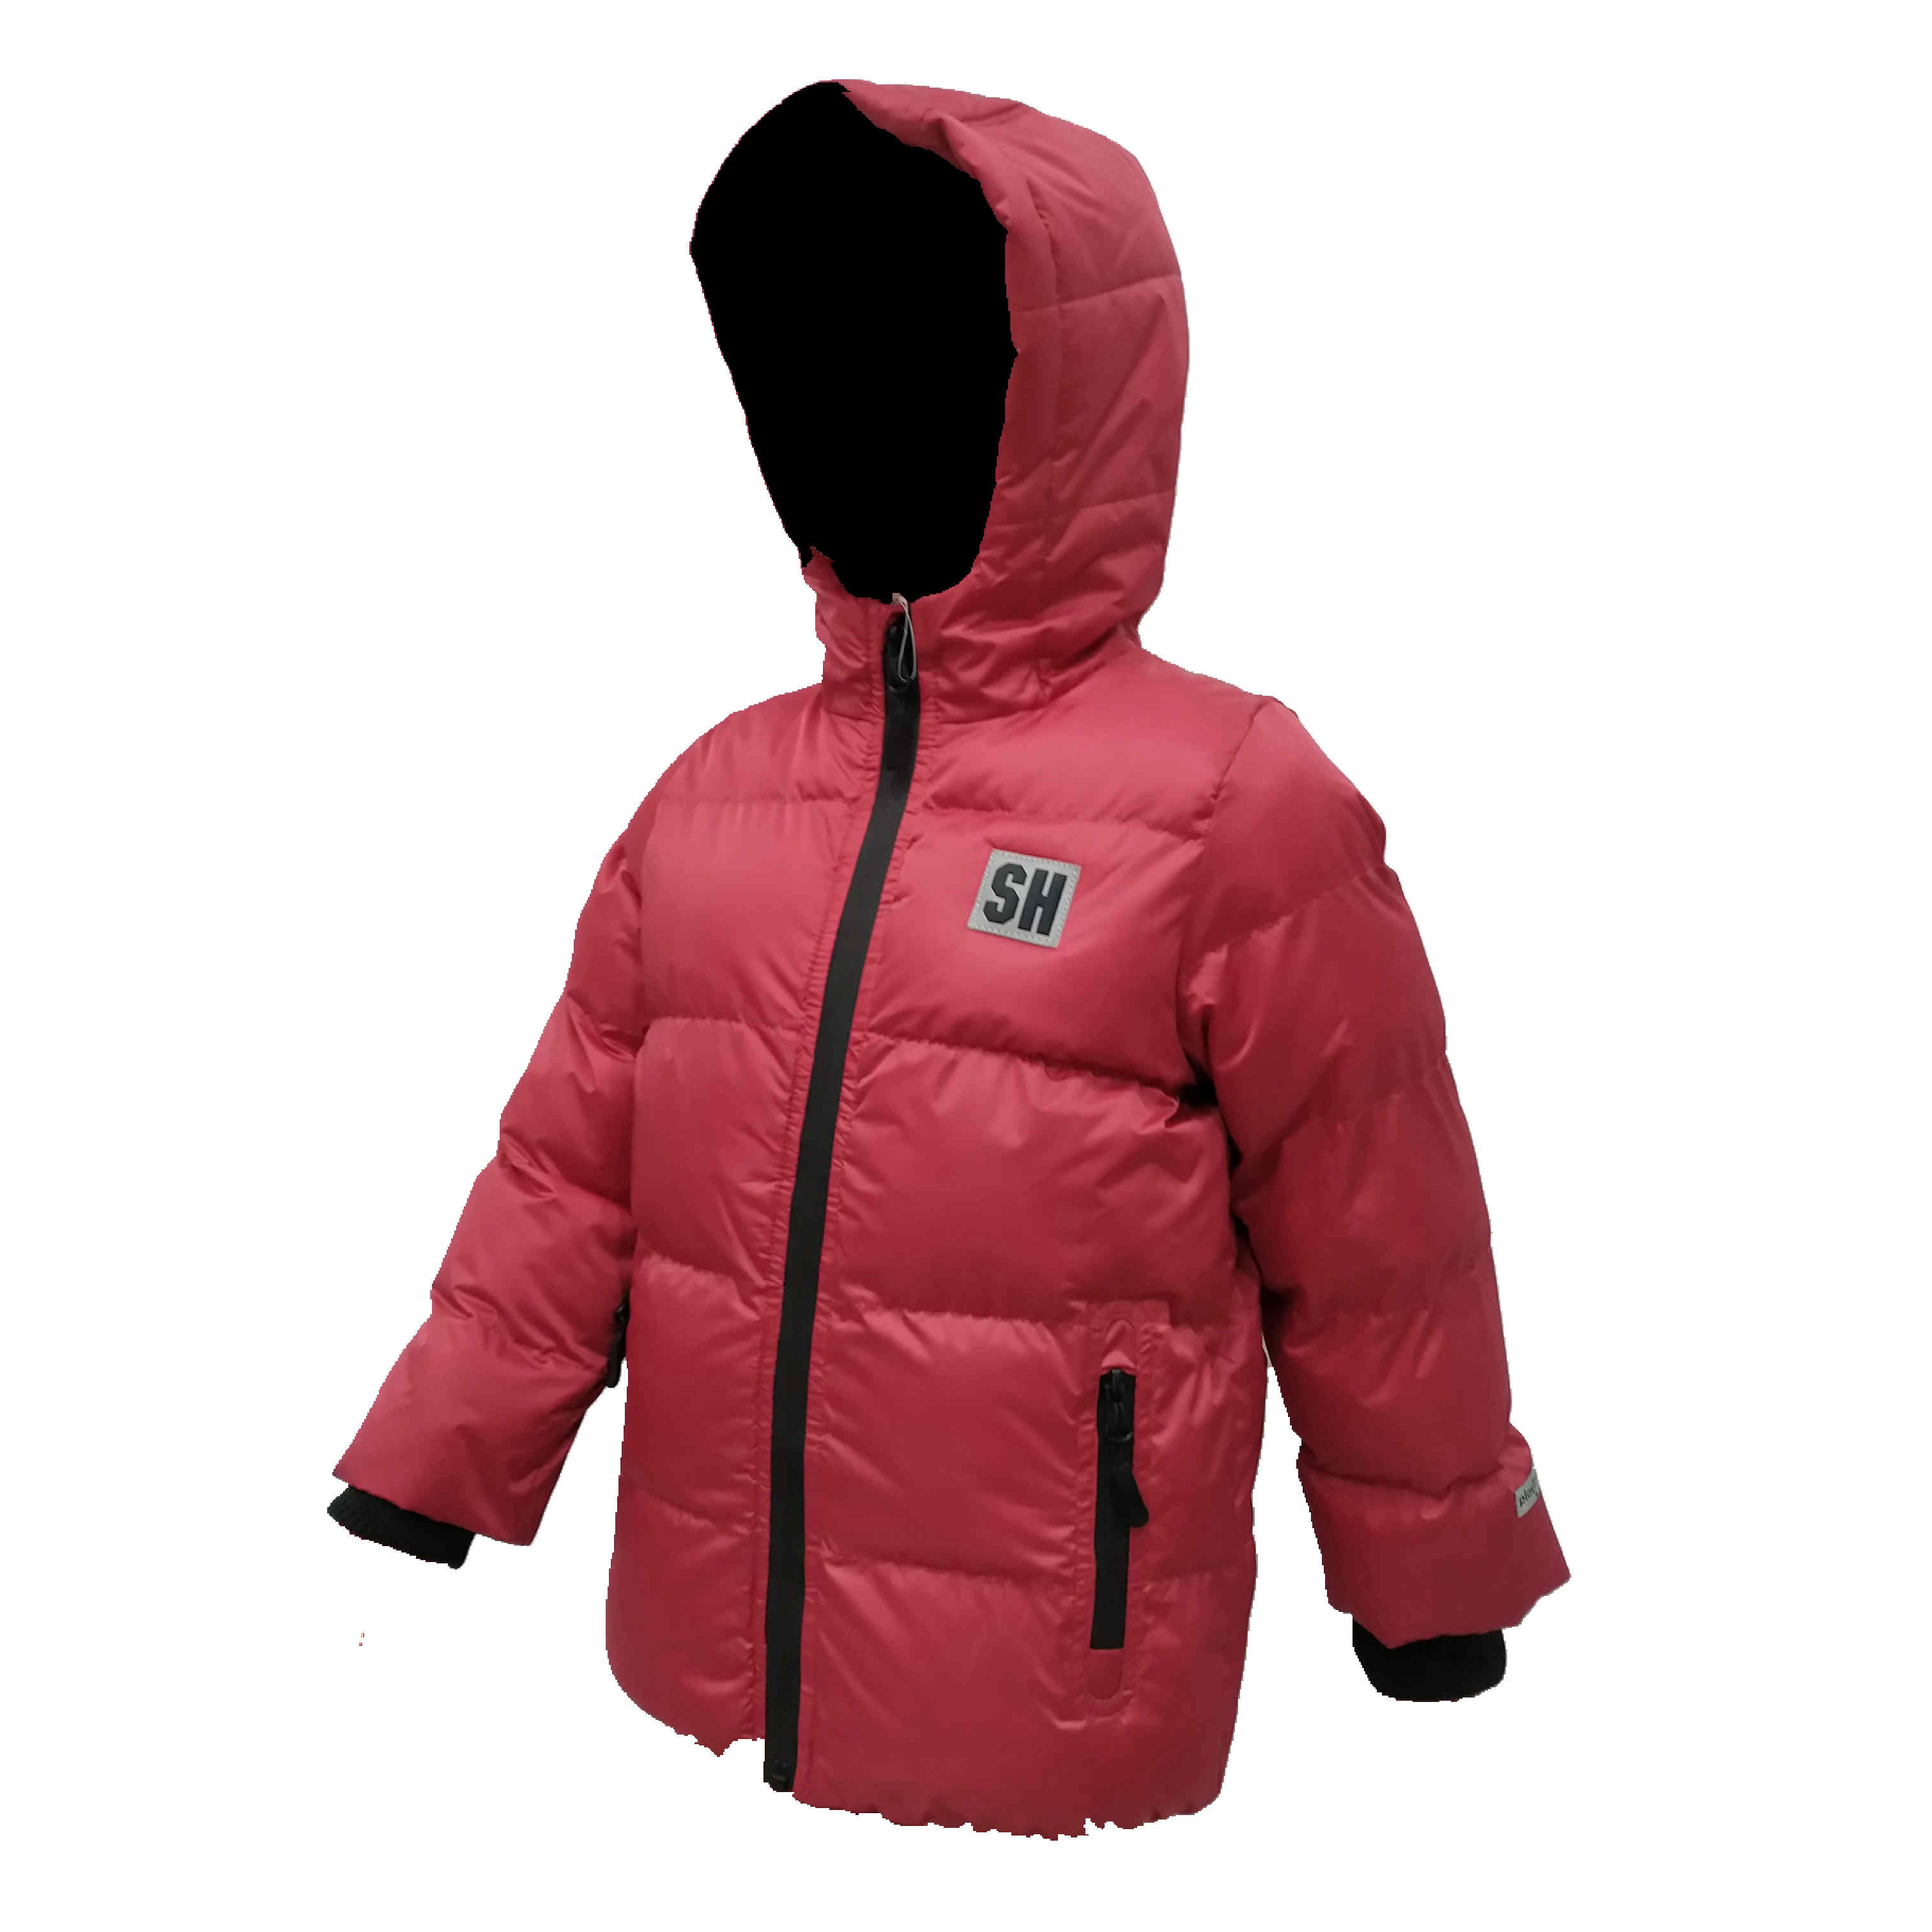 Children's ski jacket waterproof windproof snow wear